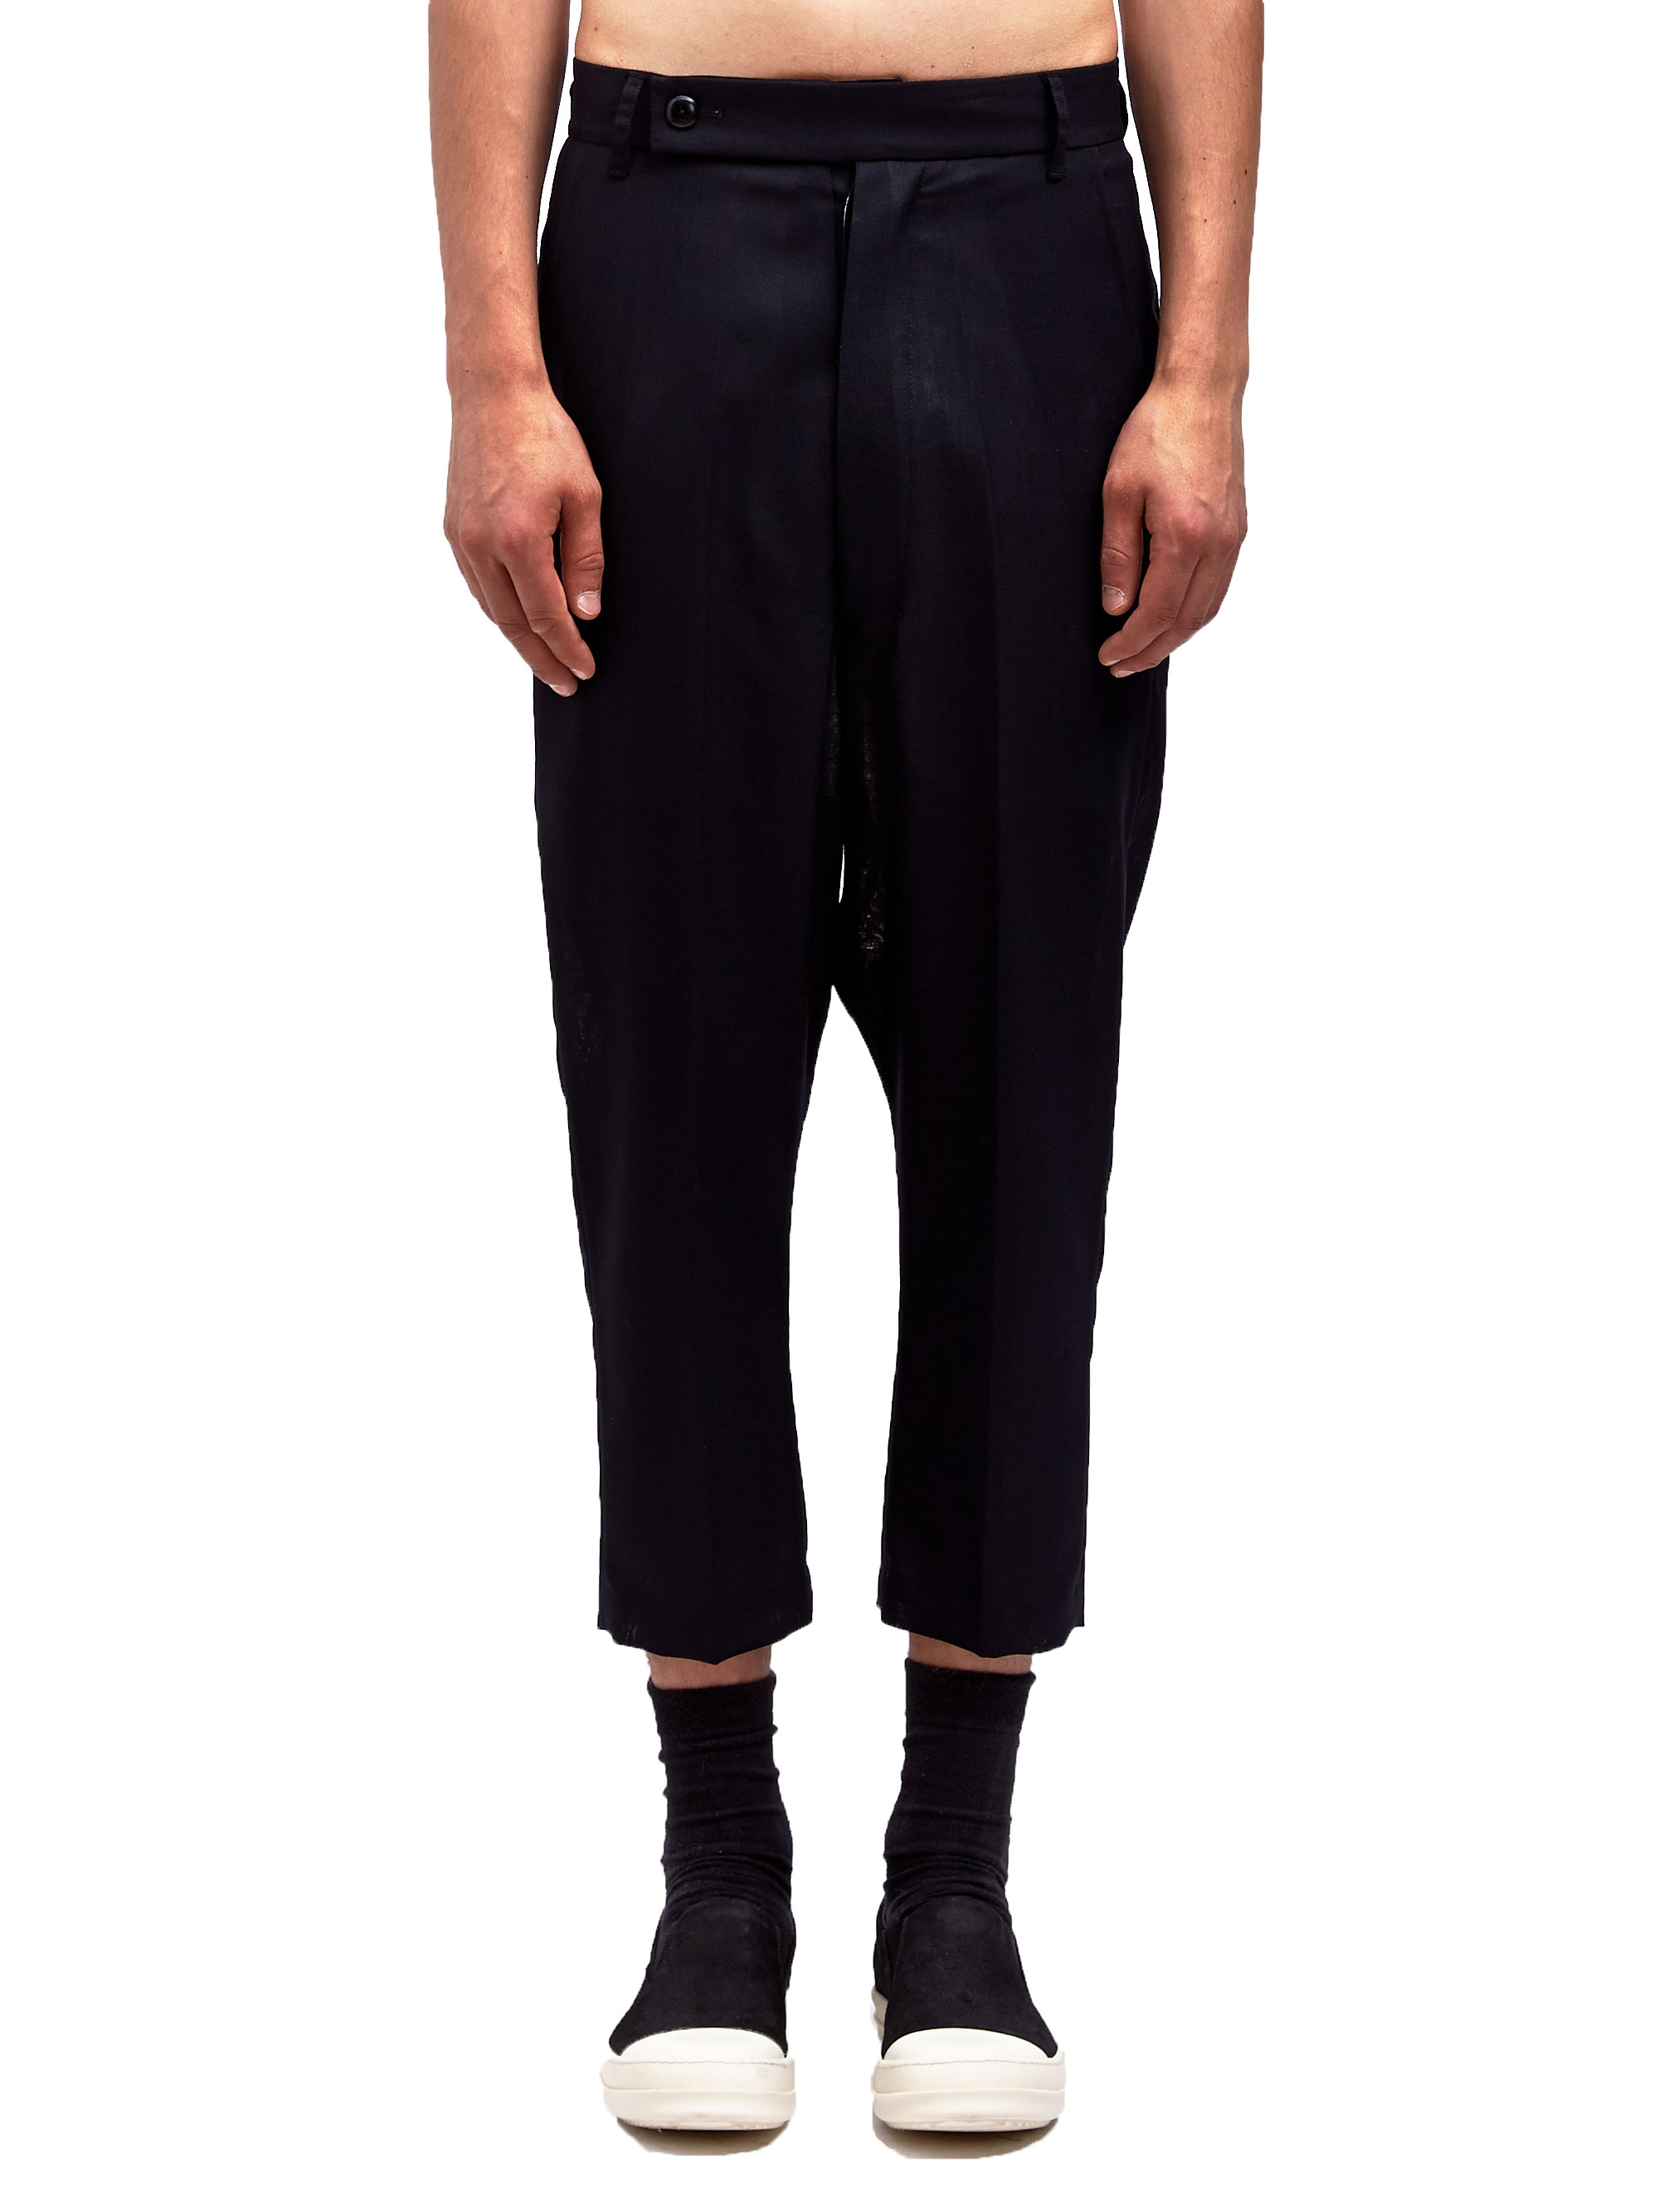 Lyst - Rick Owens Mens Low Crotch Pants in Black for Men